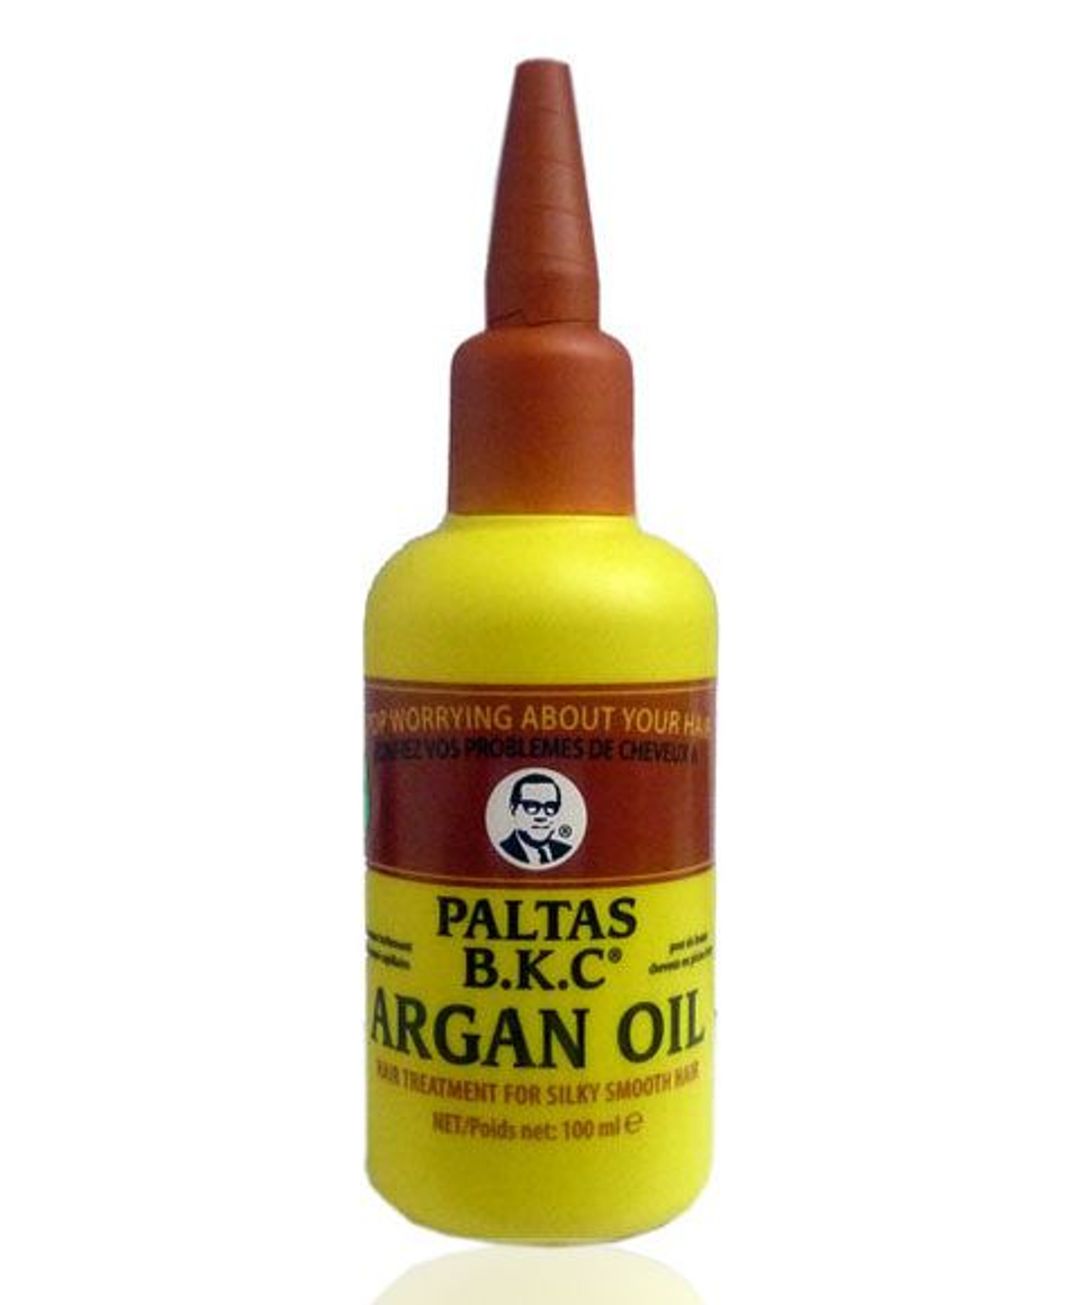 Paltas B.K.C Argan Oil Hair Treatment For Silky Smooth Hair - 100ml